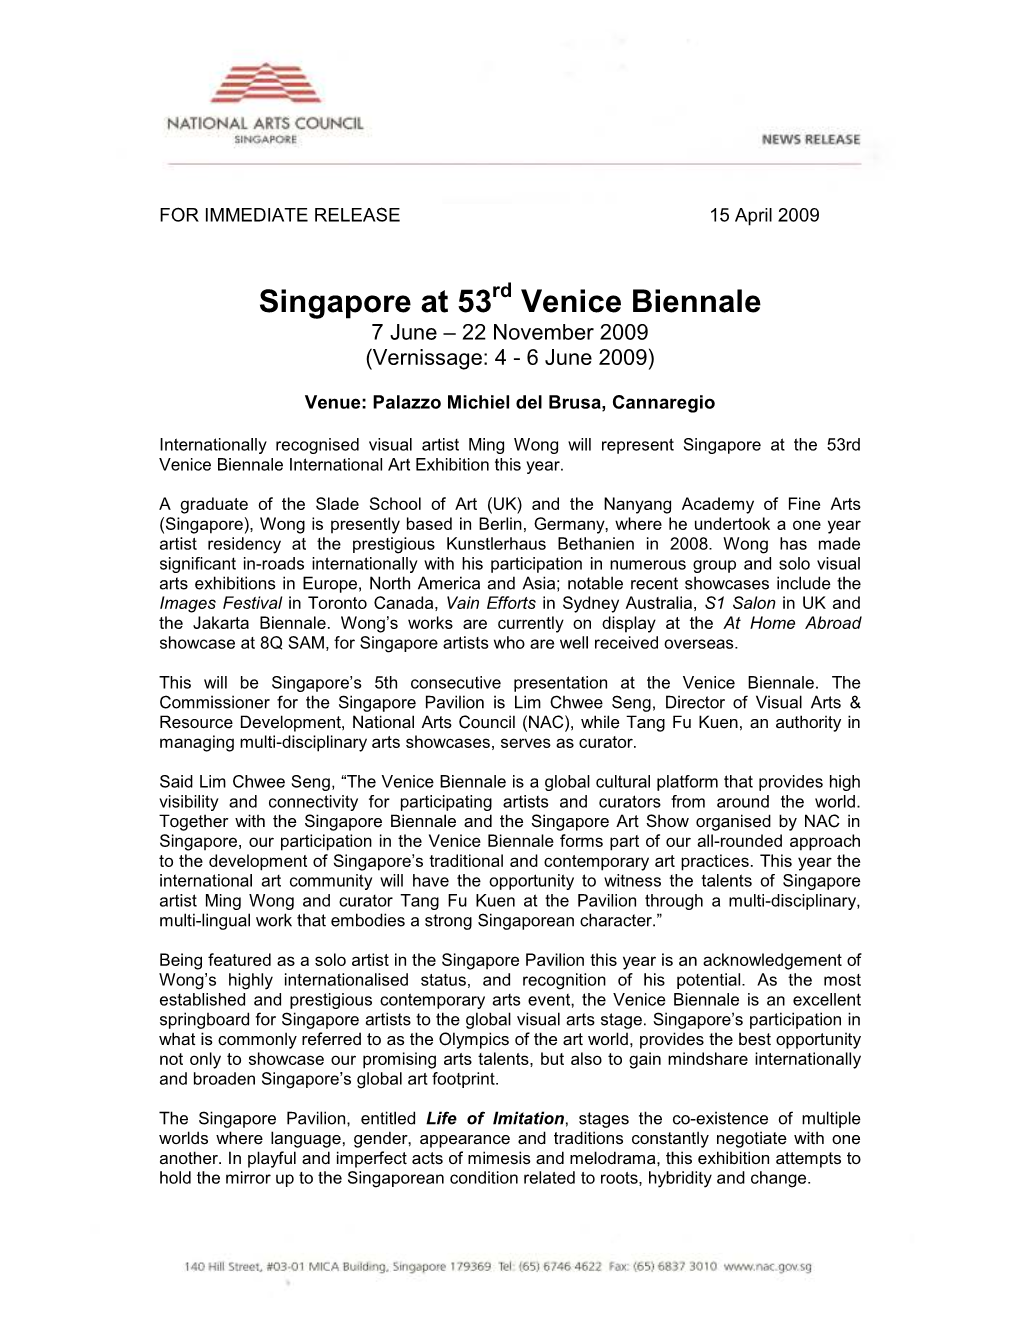 Singapore at 53 Venice Biennale